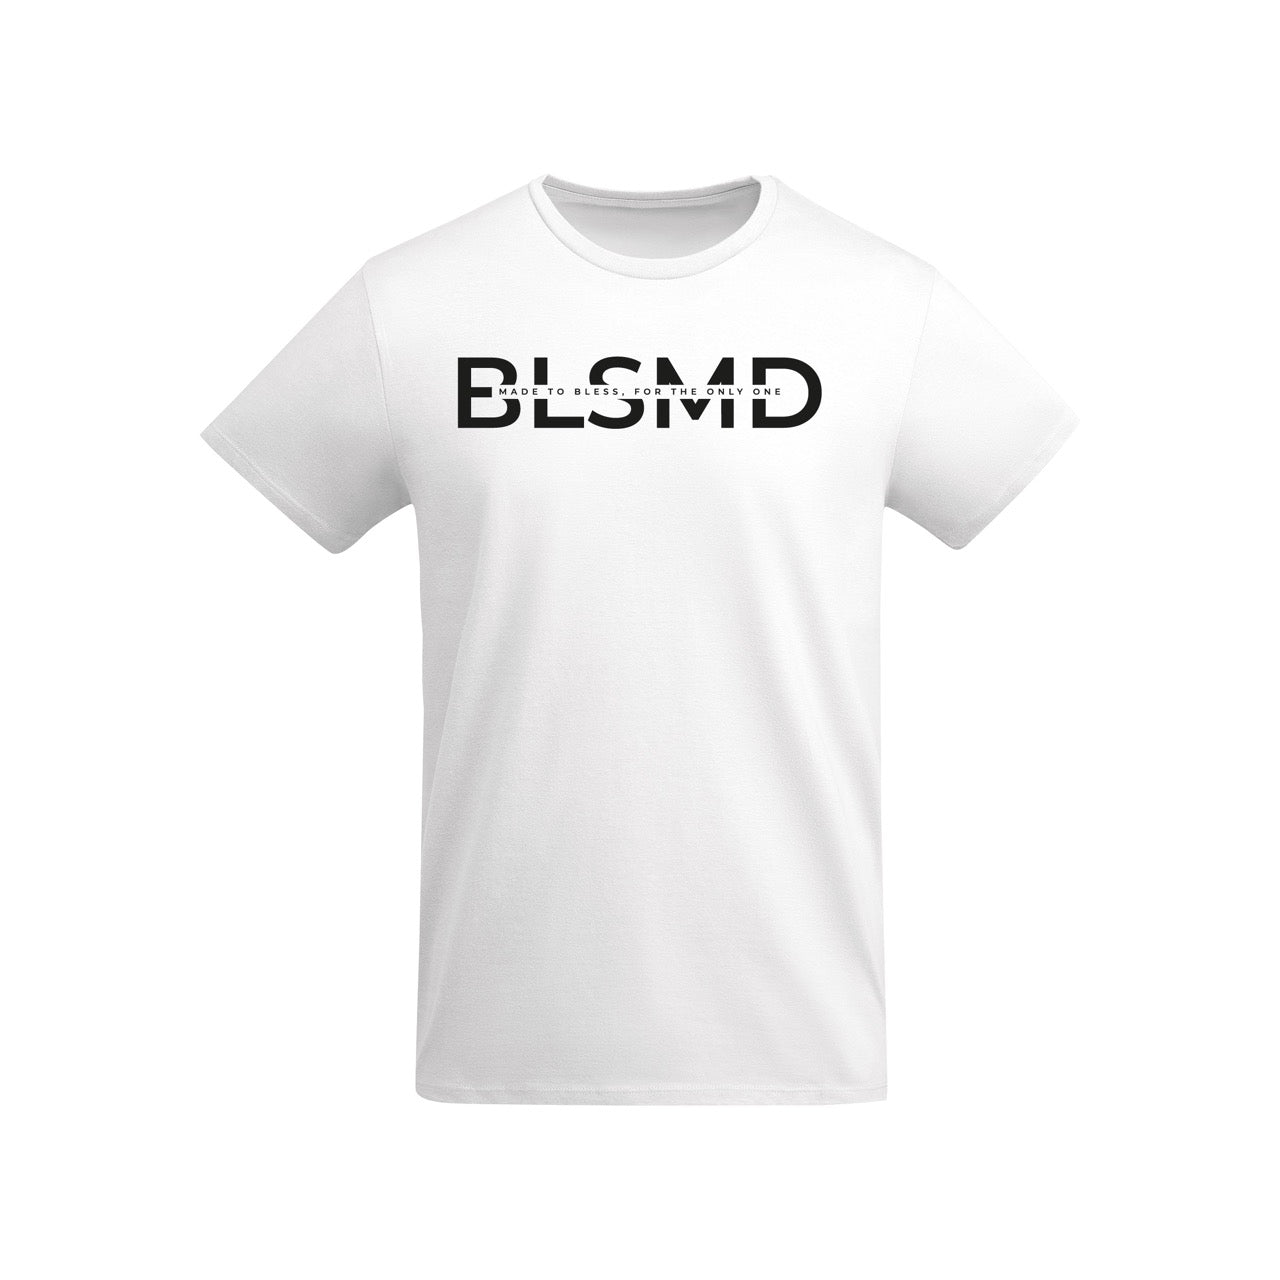 Camiseta Blanca BLSMD Basic